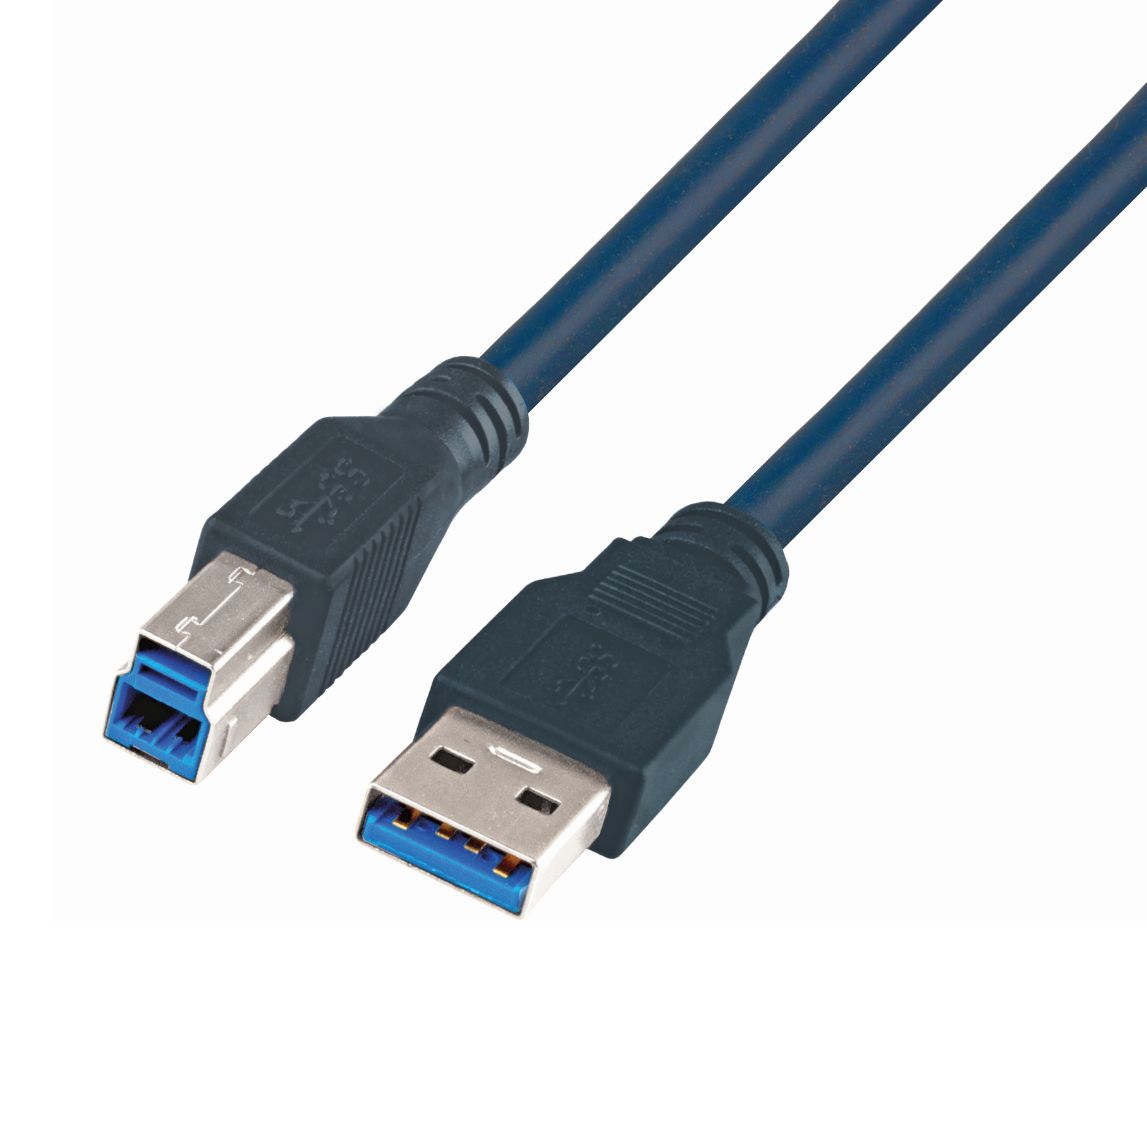 Flexible USB 3.0 cable quality PREMIUM+ with 2 ferrite cores INDUSTRIAL VERSION 50cm